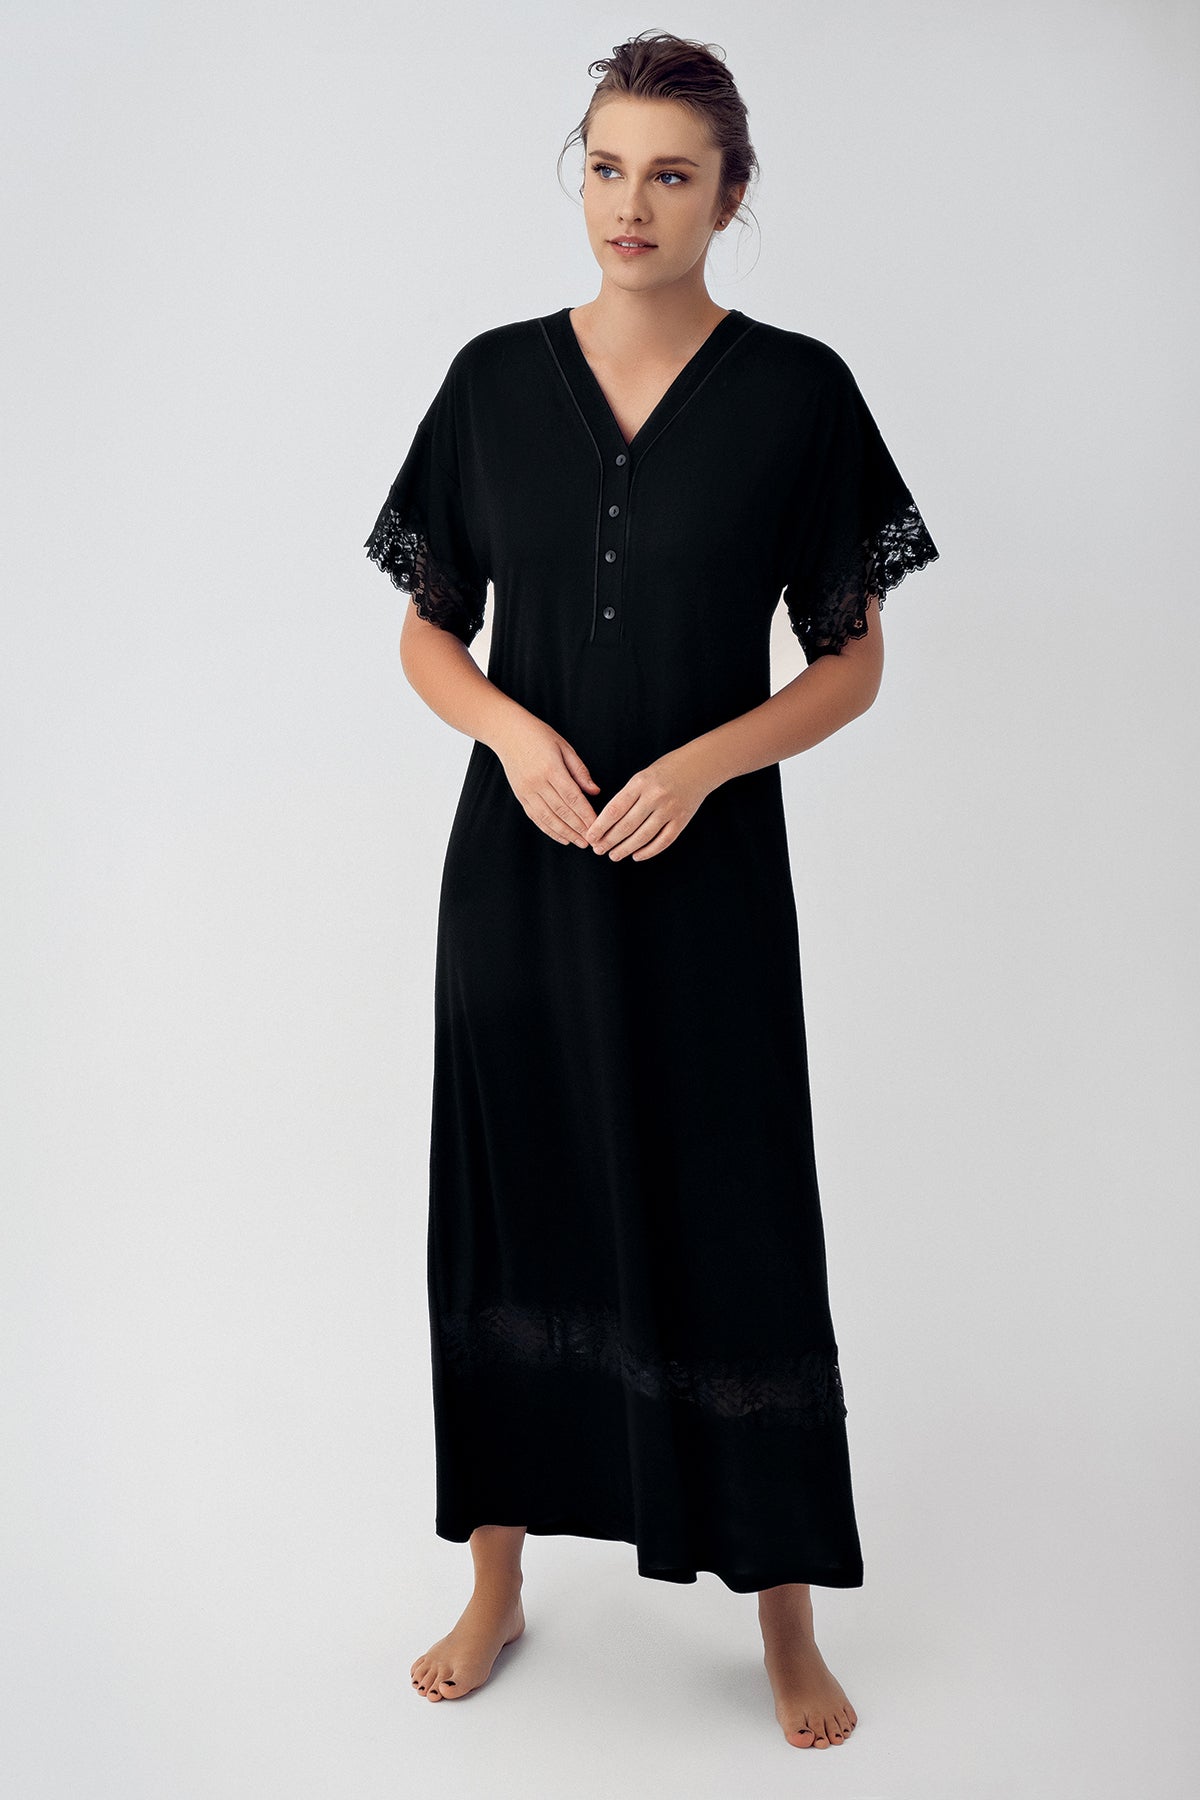 Shopymommy 16111 Lace Sleeve Maternity & Nursing Nightgown Black